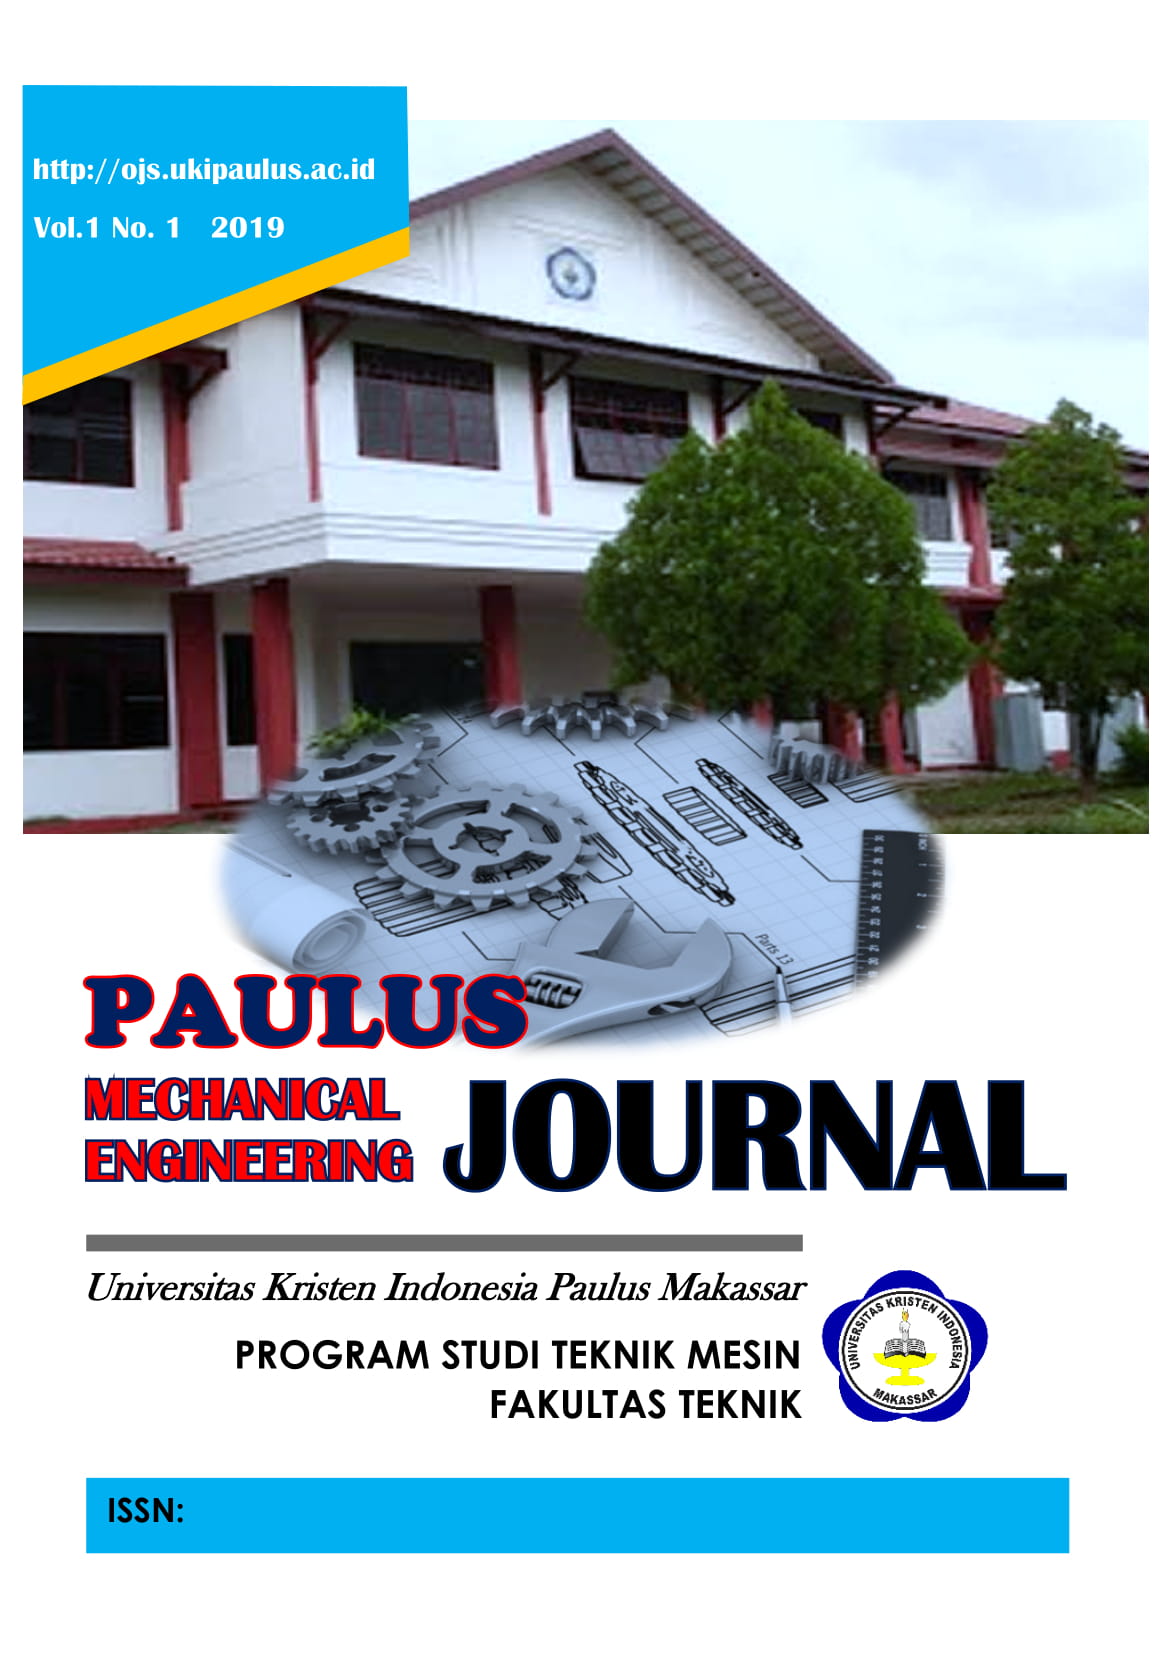 					Lihat Vol 1 No 1 (2019): Vol.1 No.1 Maret 2019 Paulus Mechanical Engineering Journal
				